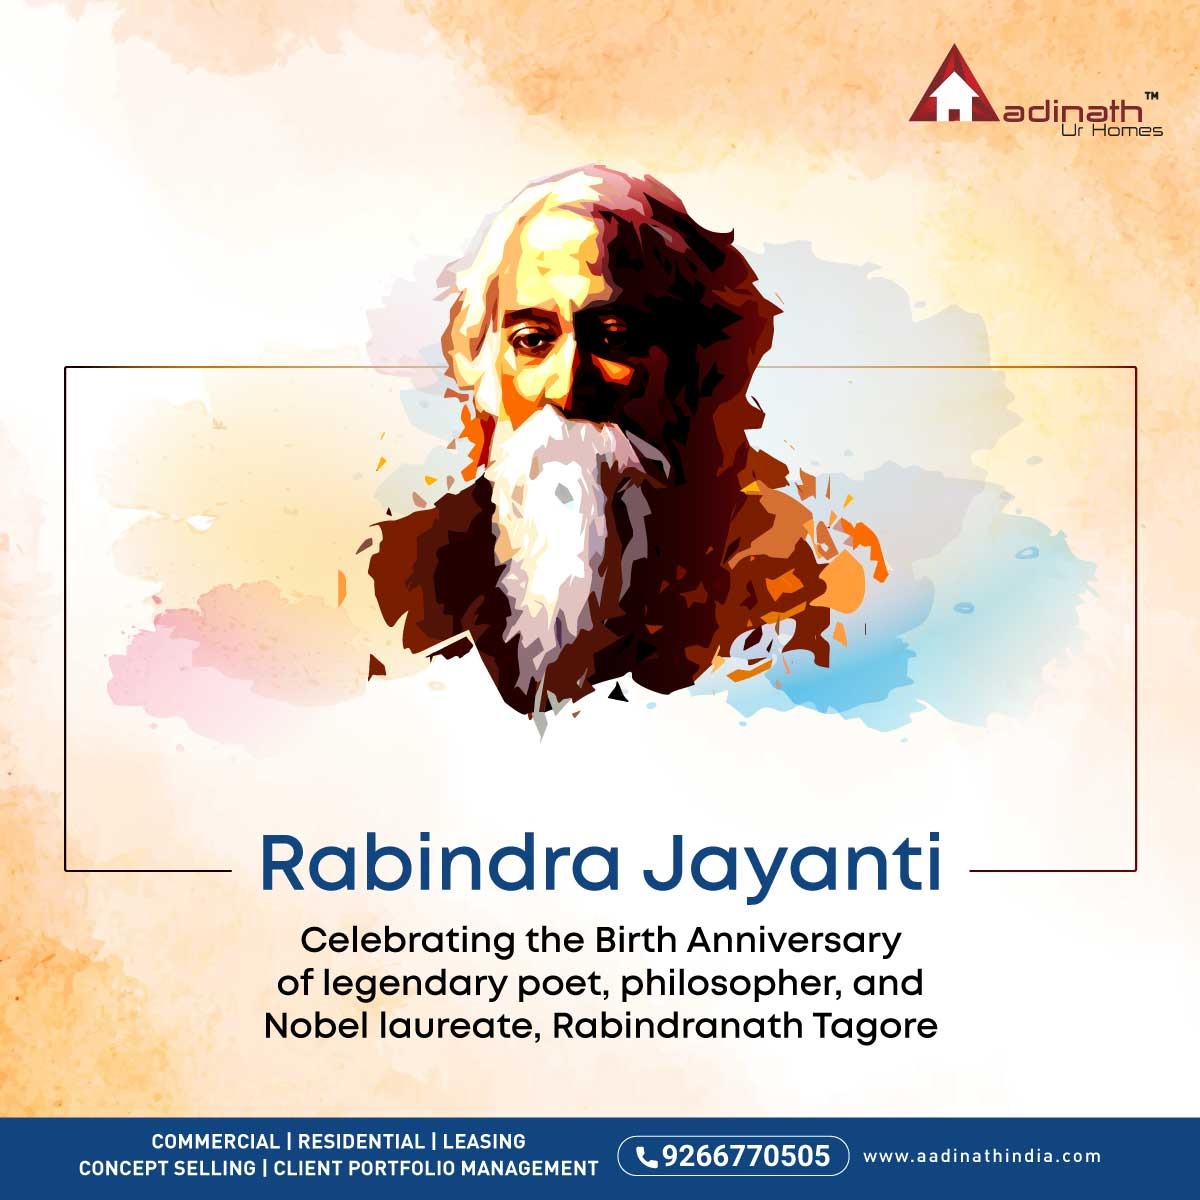 Tagore's legacy lives on, inspiring generations.
#RabindraJayant #Legacy #Poetry #Philosophy #Bengali #IndianCulture #Writers #CreativeGenius #RabindraJayanti #AadinathIndia #AadinathUrHomes #OfficeSpace #RetailSpace